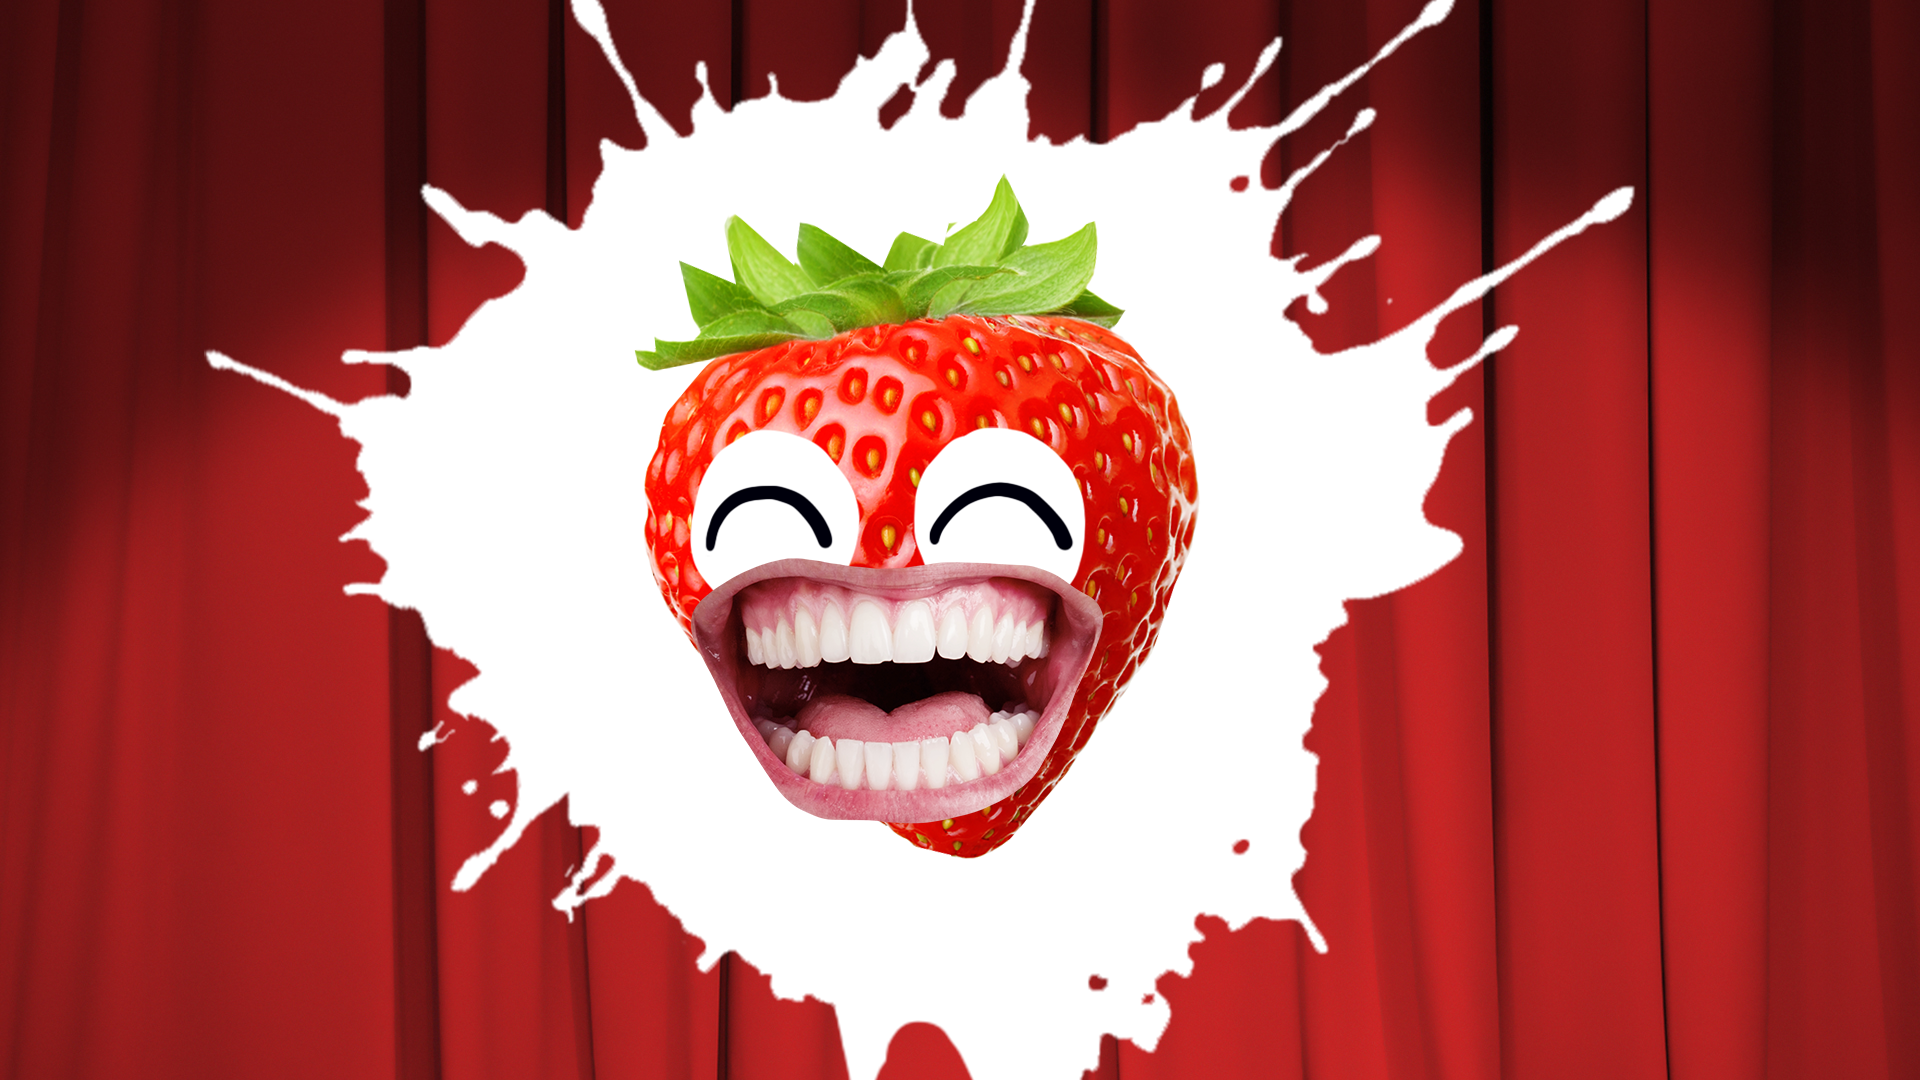 Strawberry jokes